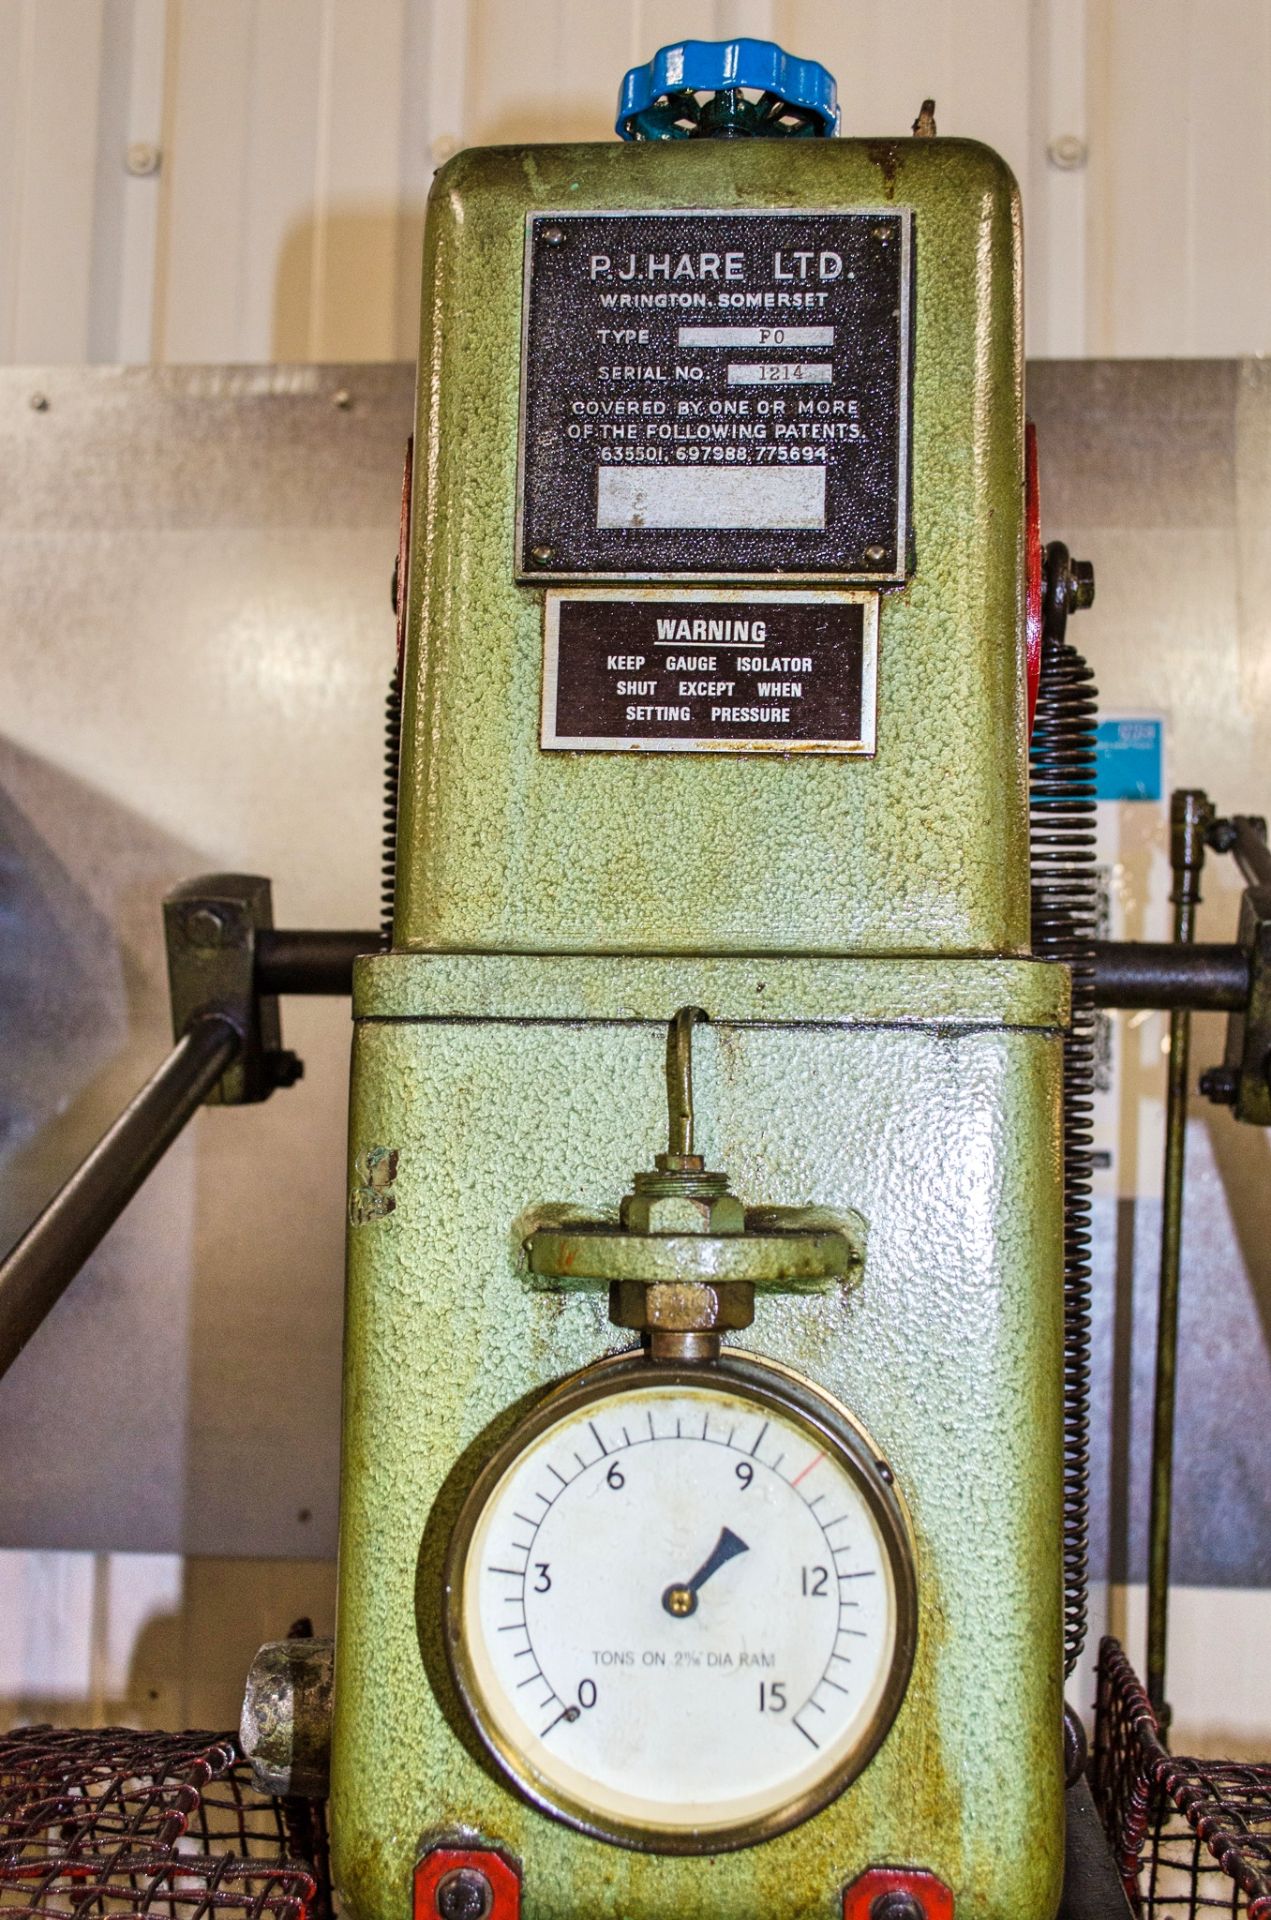 P.J. Hare P.O. hydraulic press - Image 3 of 3